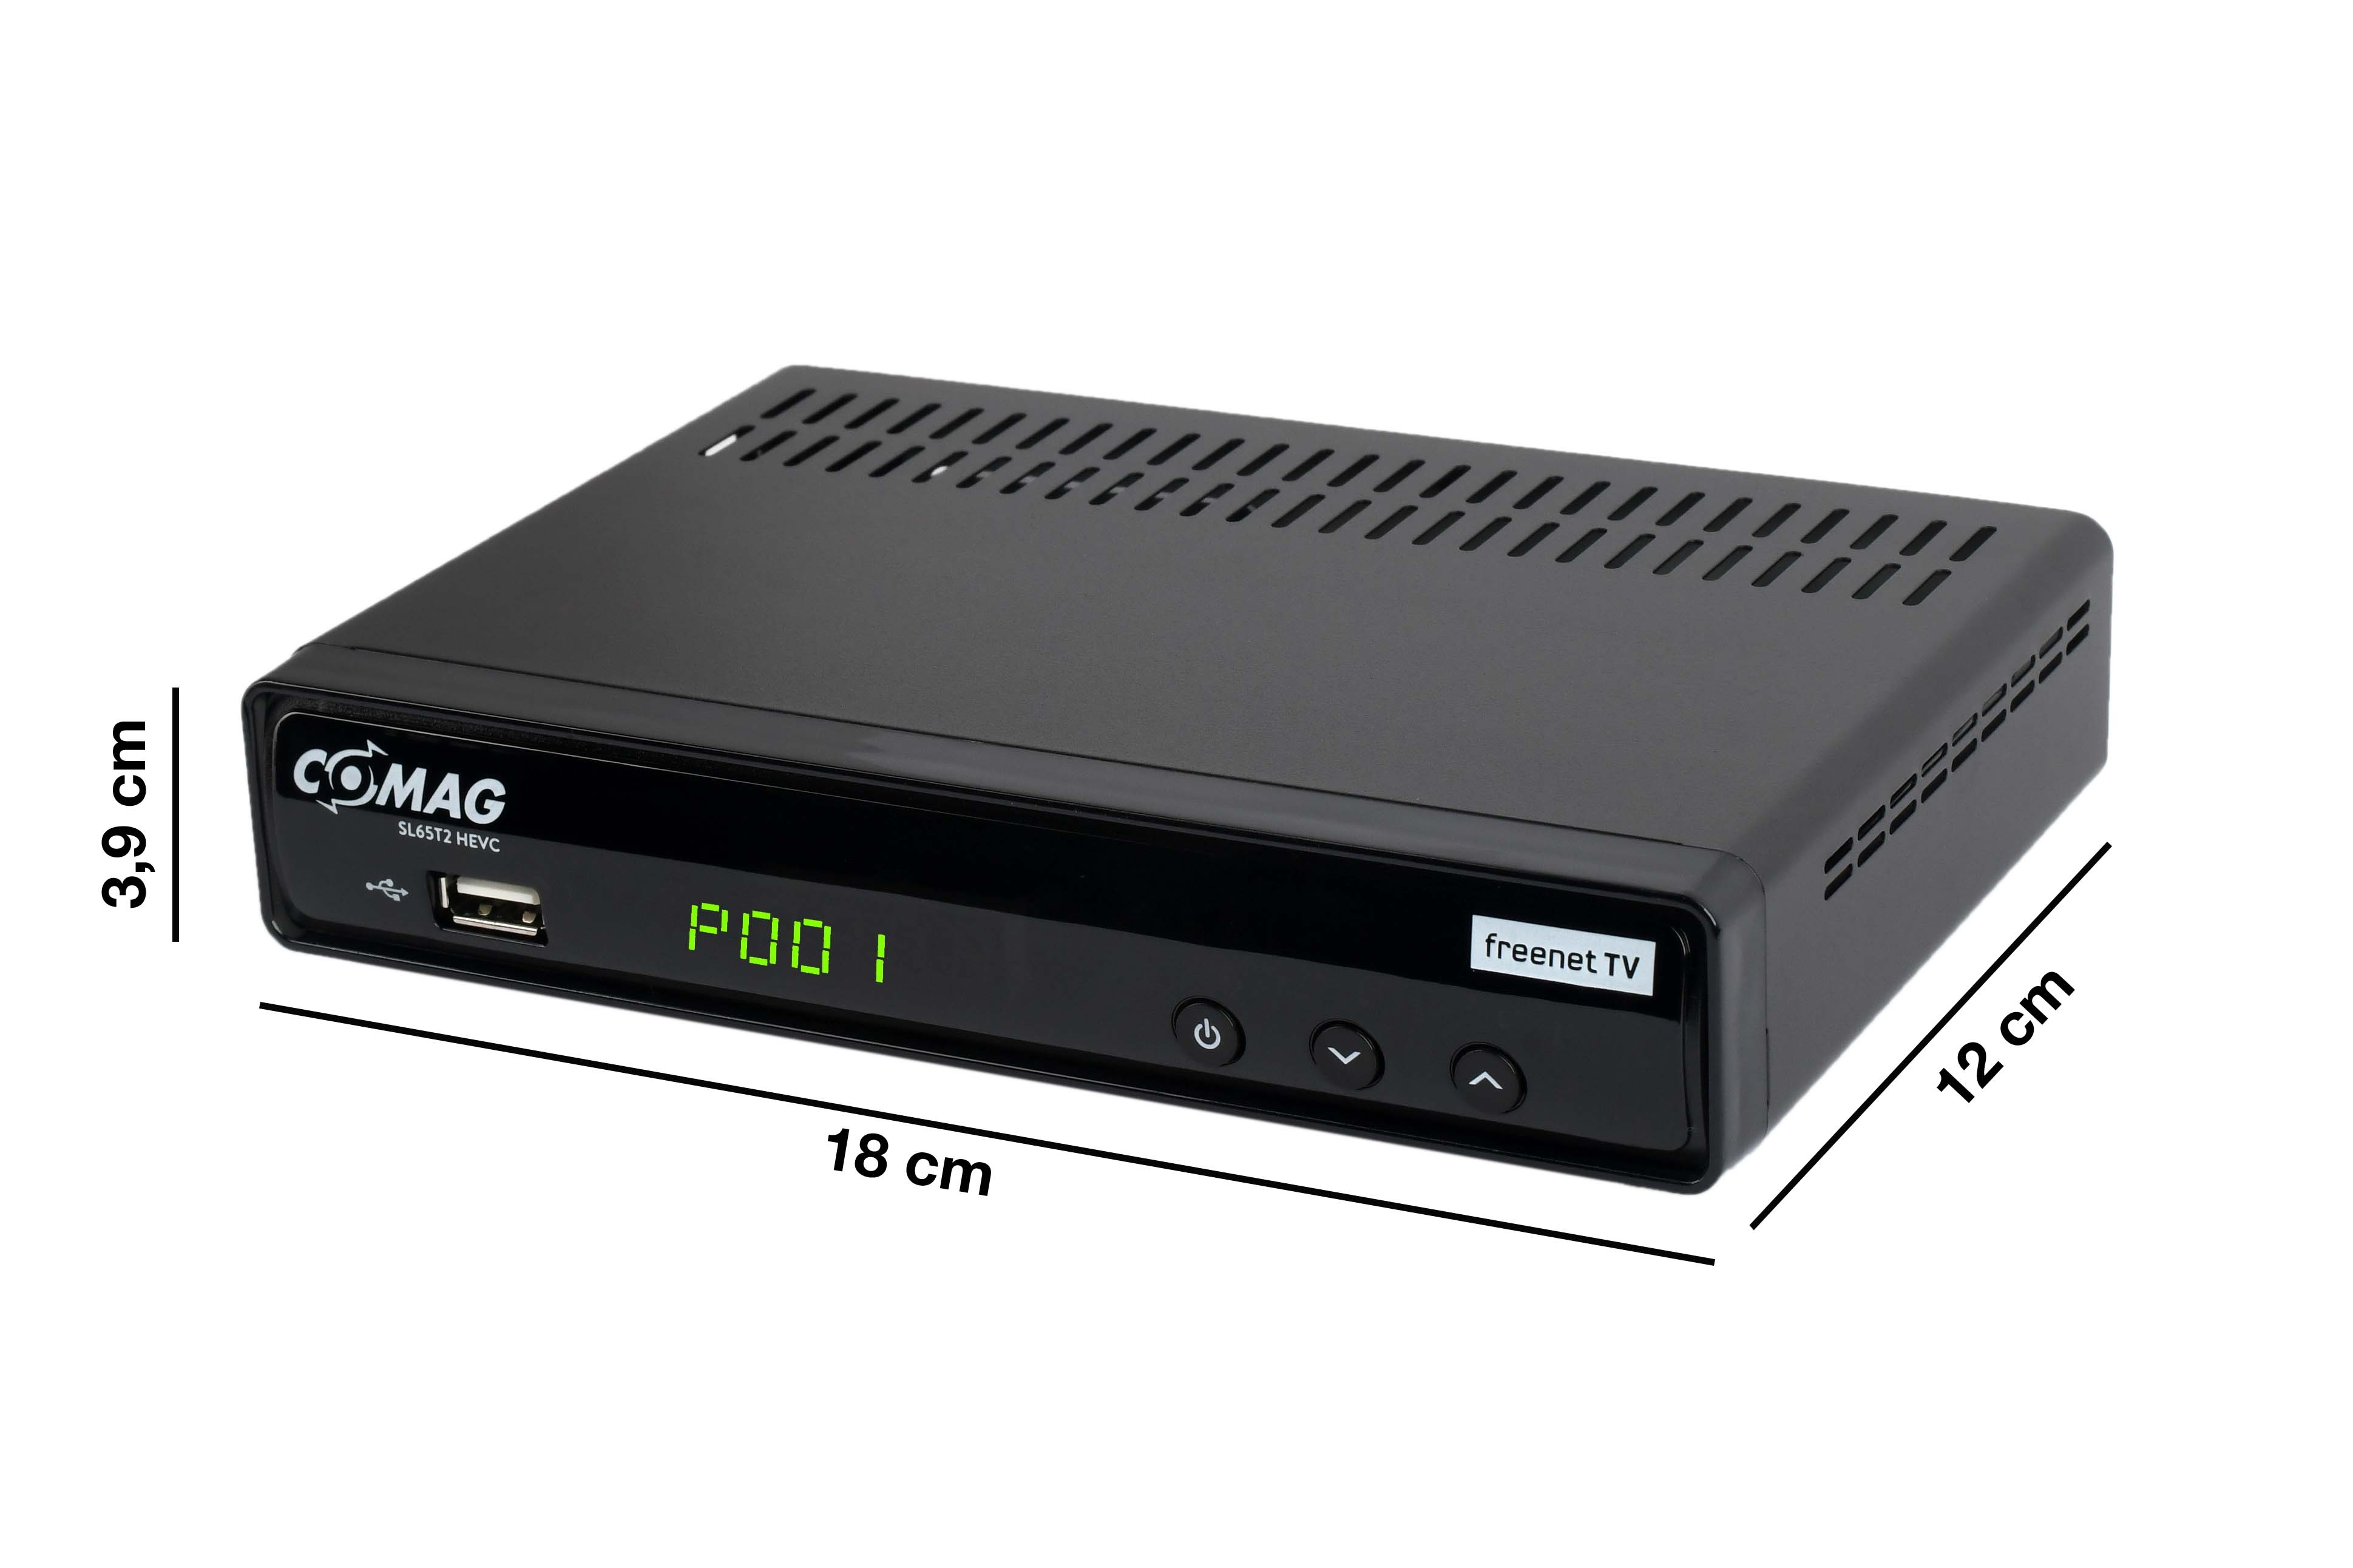 Bundel (H.264), schwarz) SL65T2 (HDTV, PVR-Funktion, (H.265), DVB-T-Receiver DVB-T2 DVB-T, COMAG DVB-T2 Home